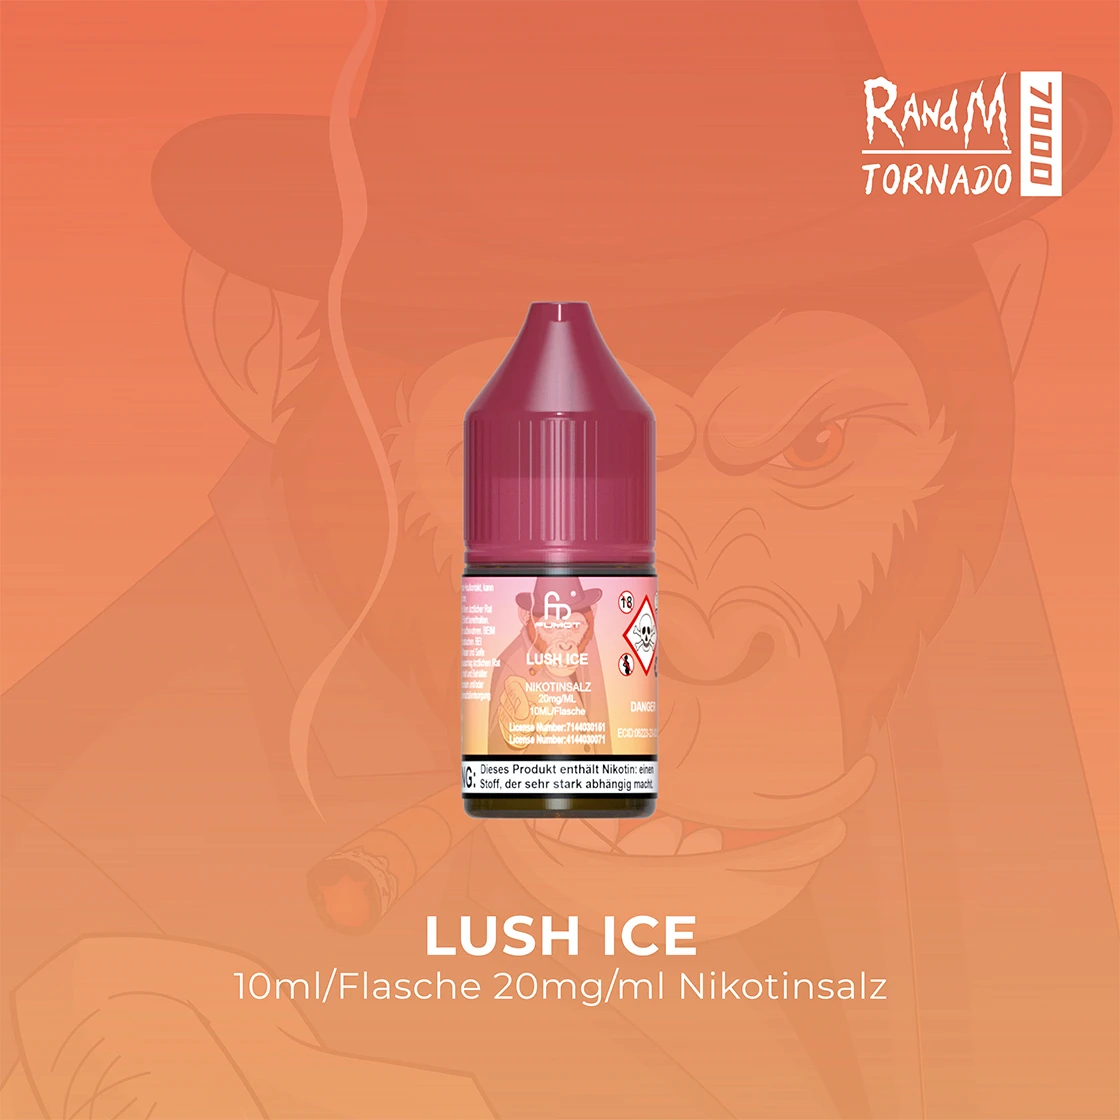 RandM Tornado 7000 Lush Ice E-Liquid Nikotinsalz 20 mg | Vape Liquids 1